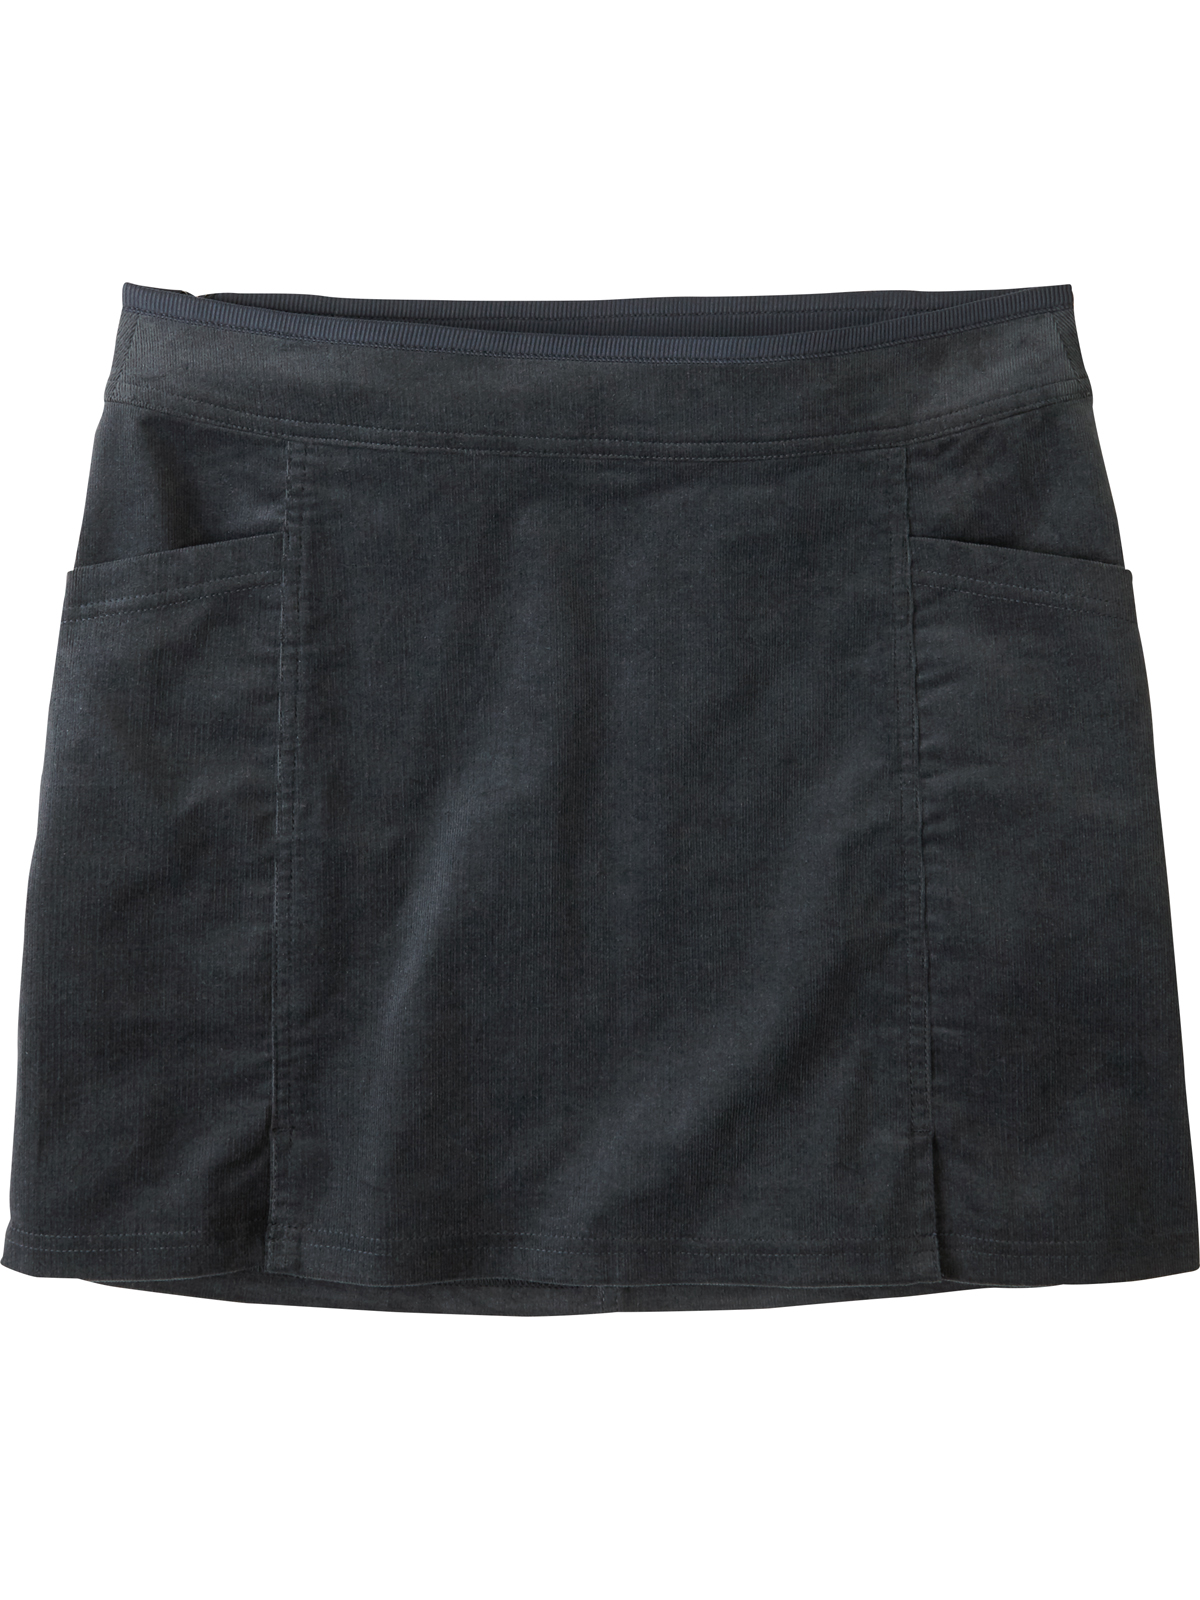 Title Nine Detail Corduroy | Clothing Kuhl Skirt